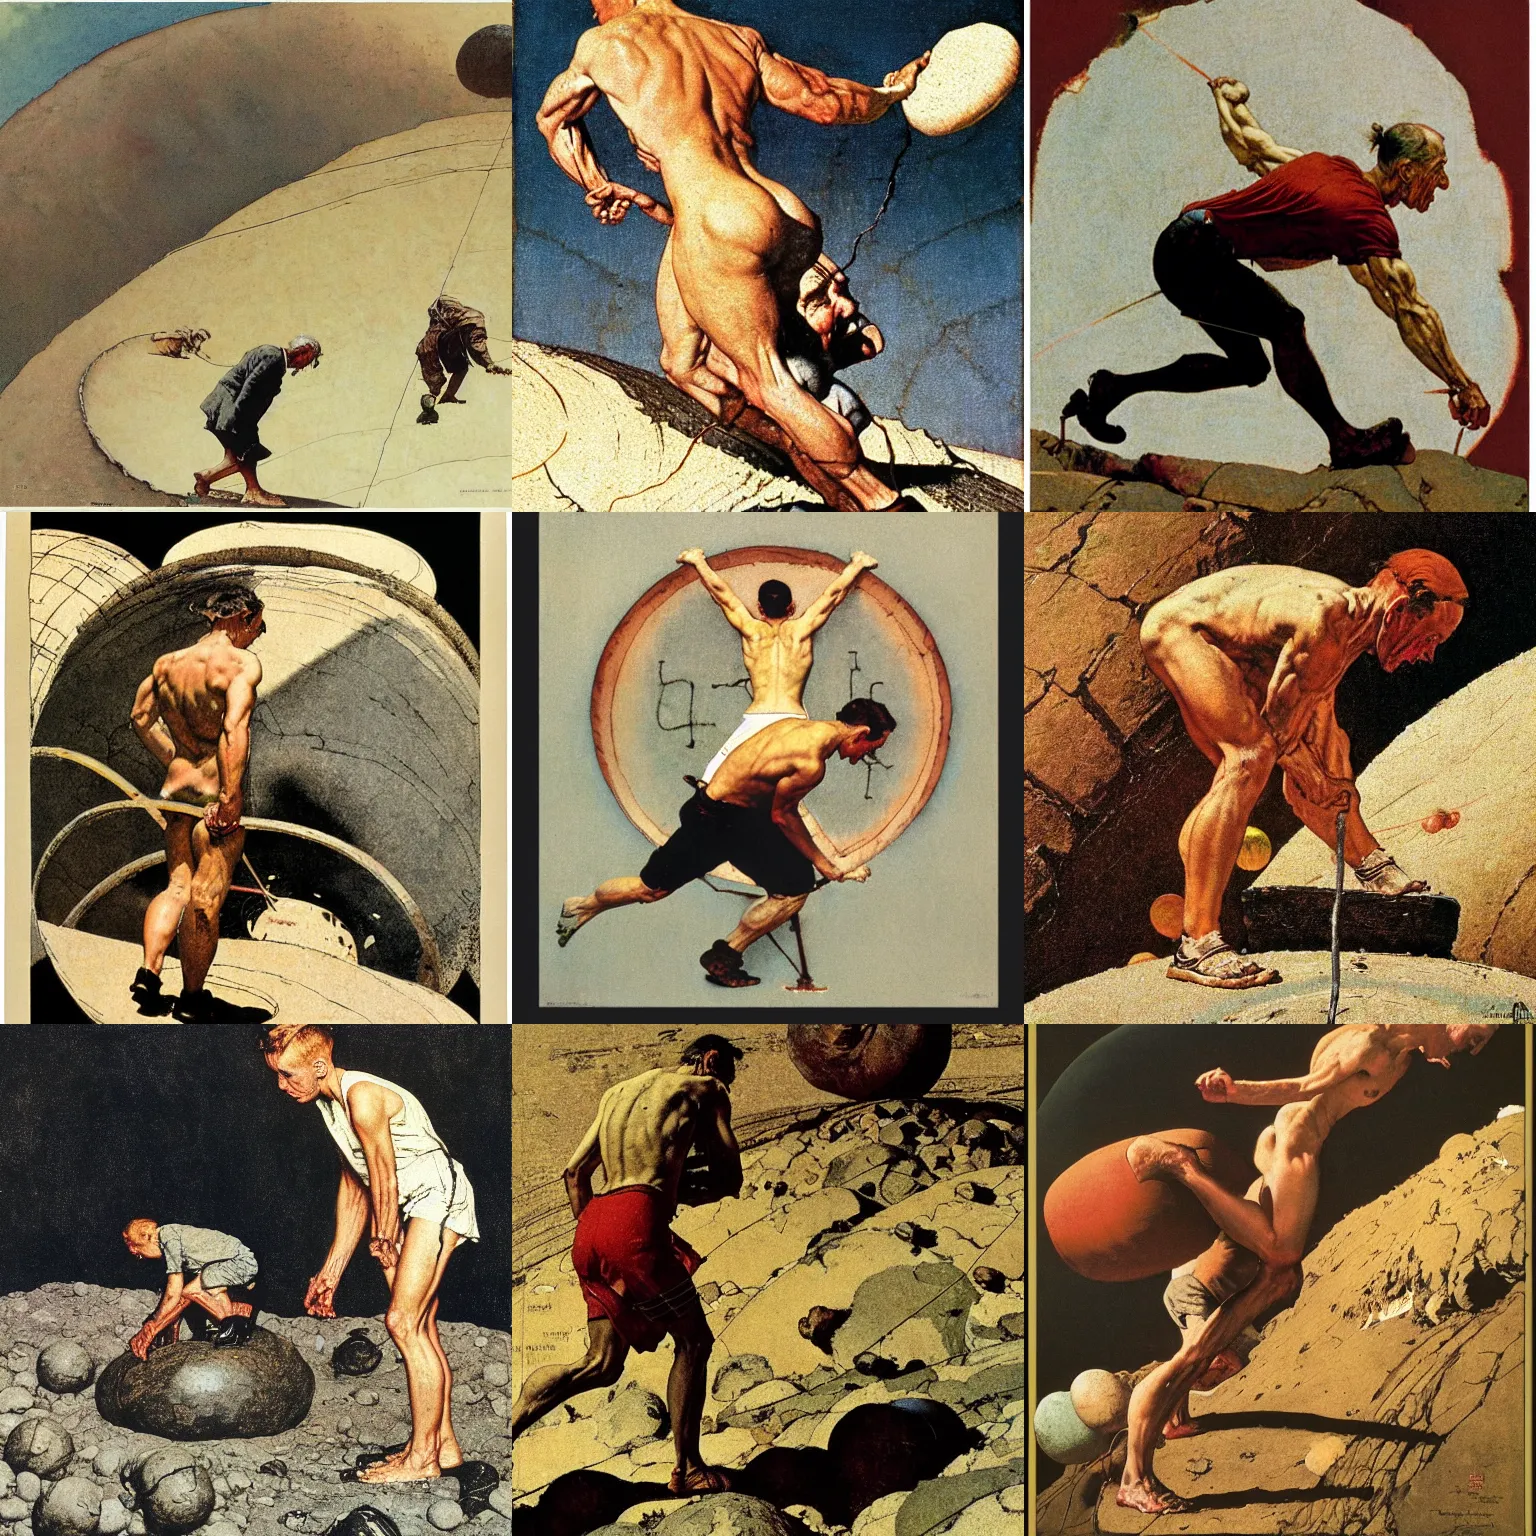 Prompt: norman rockwell illustration of sisyphus